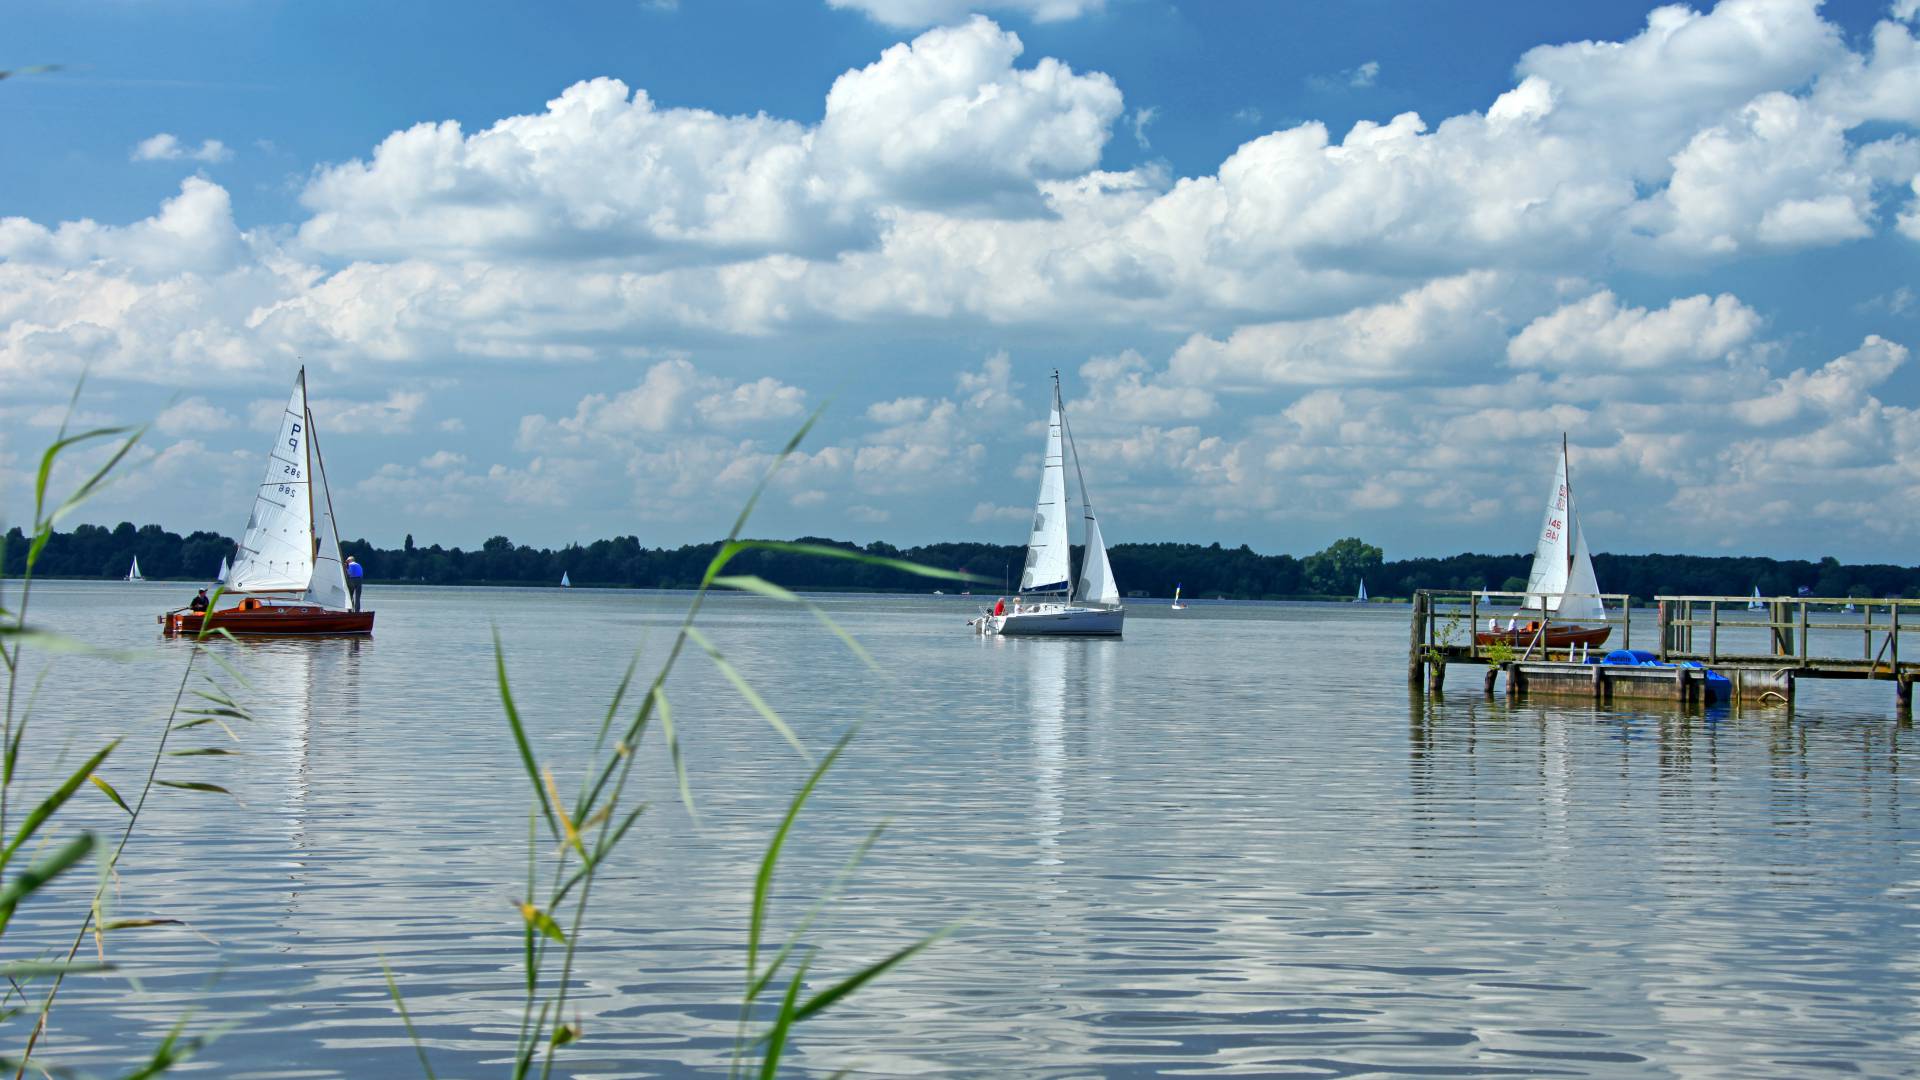 Sailboats on the lake in Bad Zwischenahn